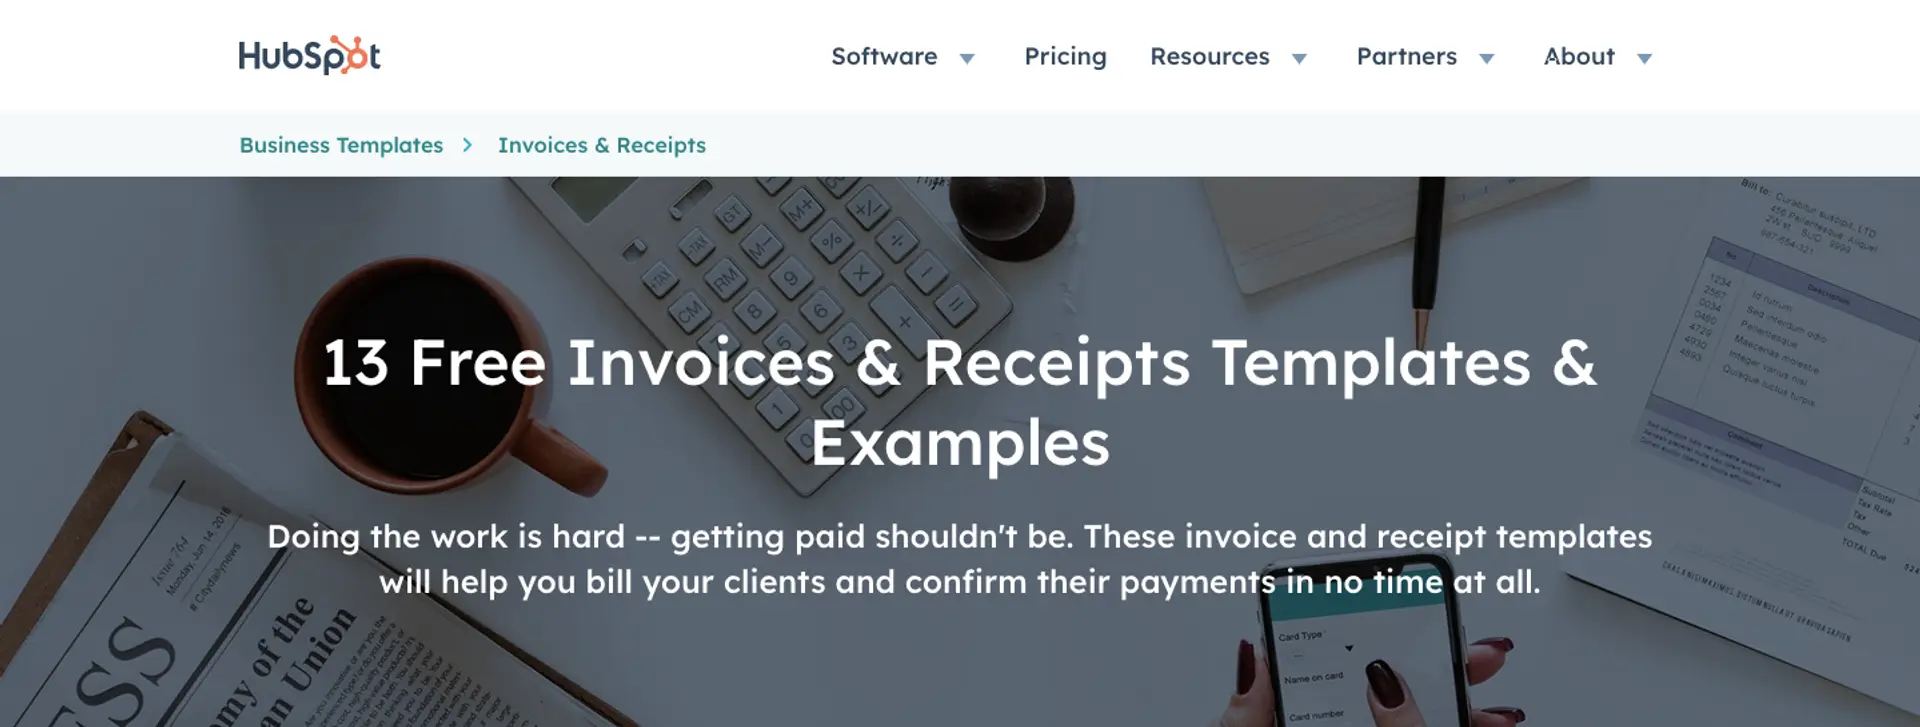 HubSpot invoice templates